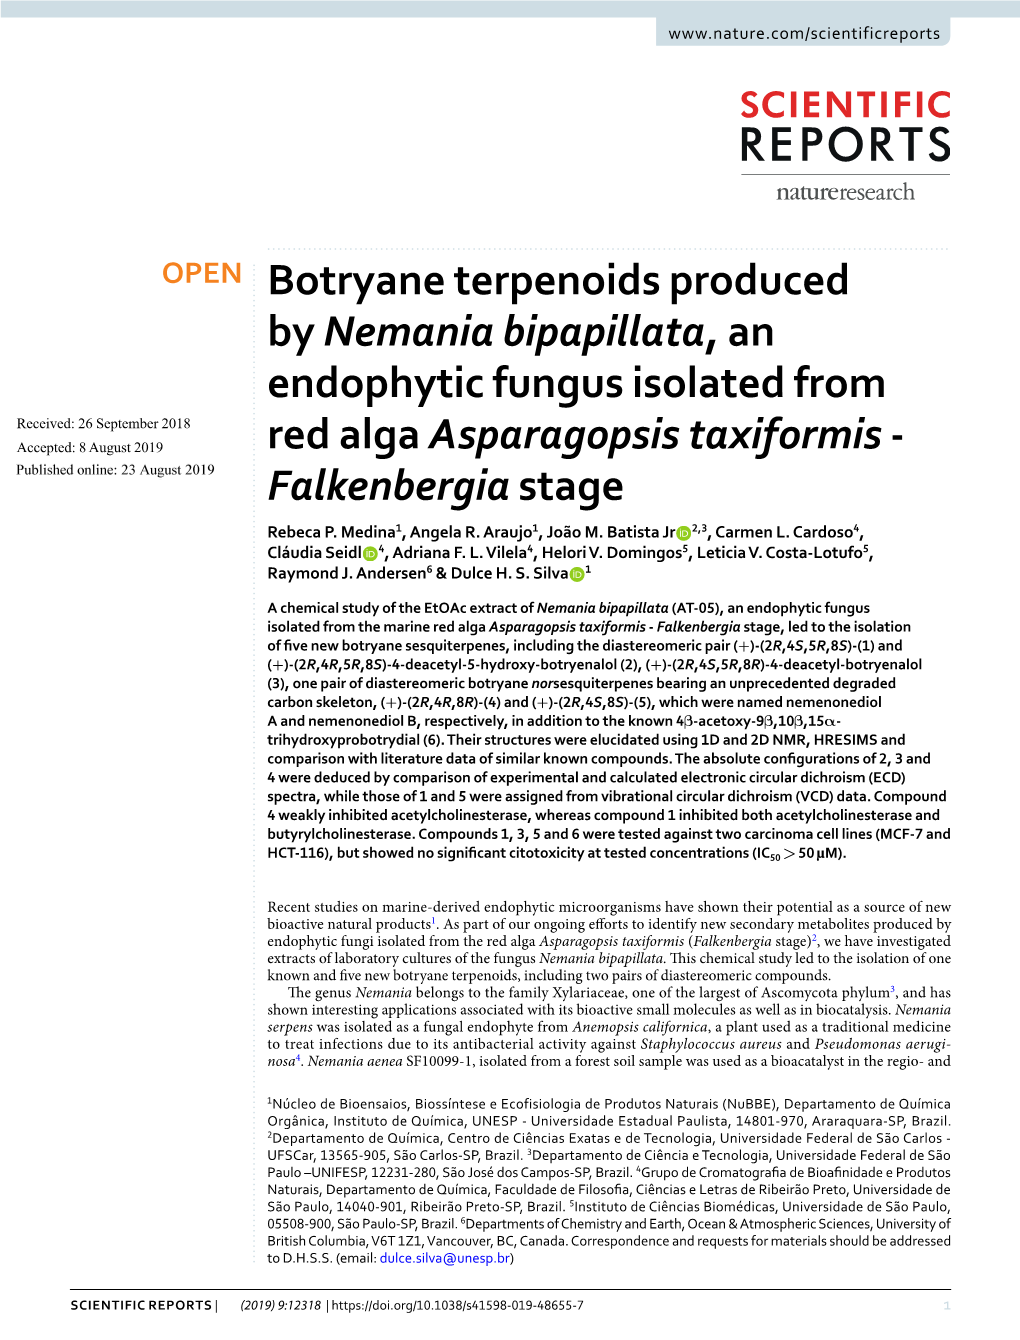 Botryane Terpenoids Produced by Nemania Bipapillata, An